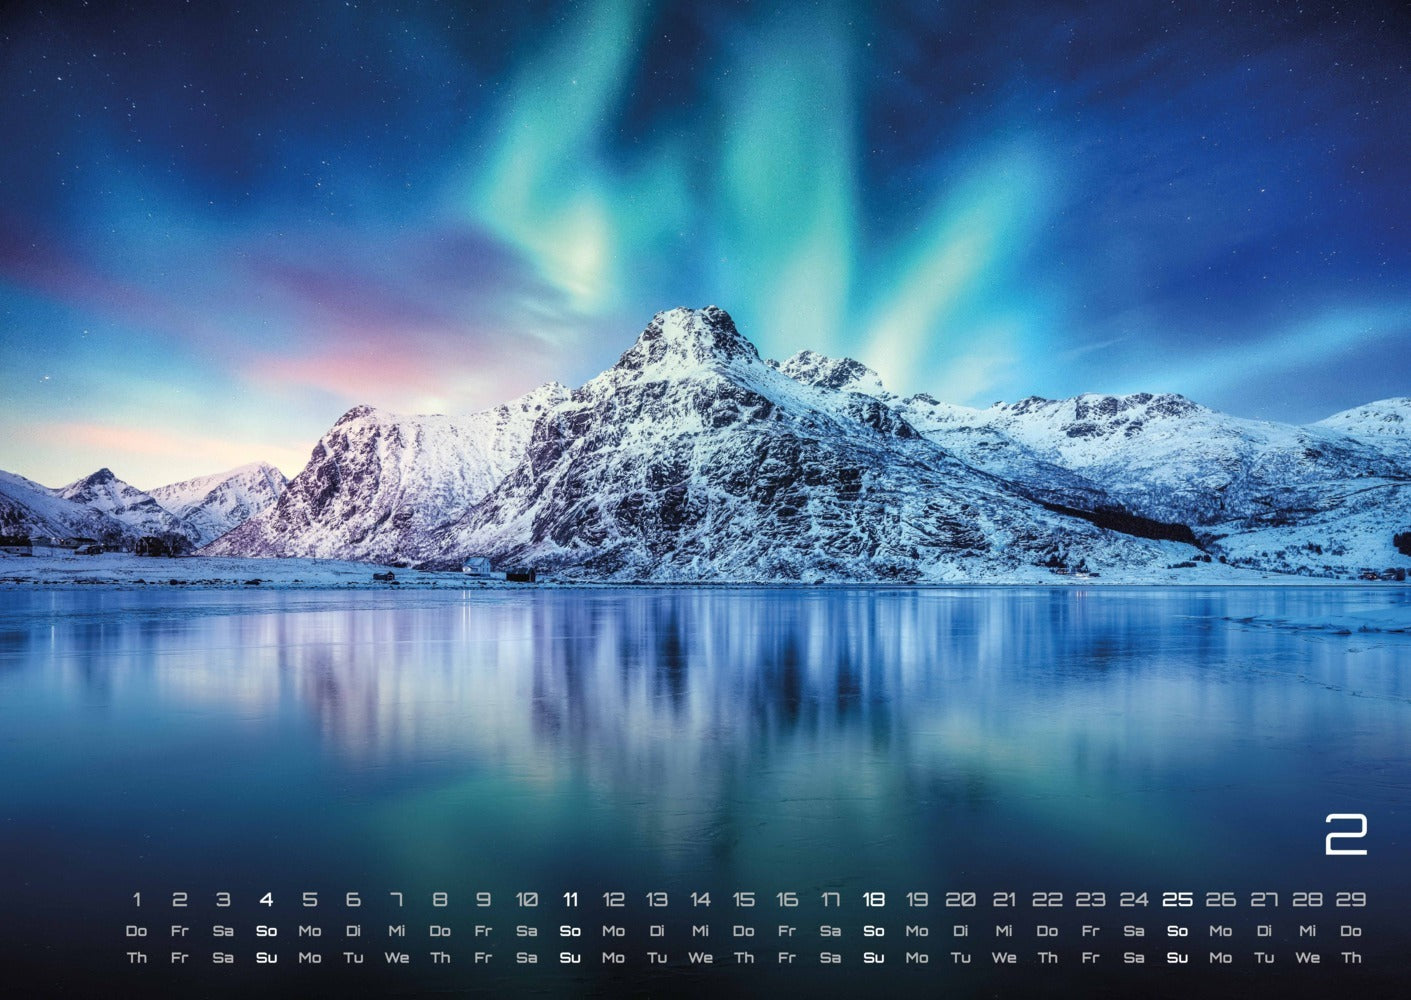 Polarlichter - Grandiose Naturschauspiele - Wandkalender 2024 - 59 x 42 cm